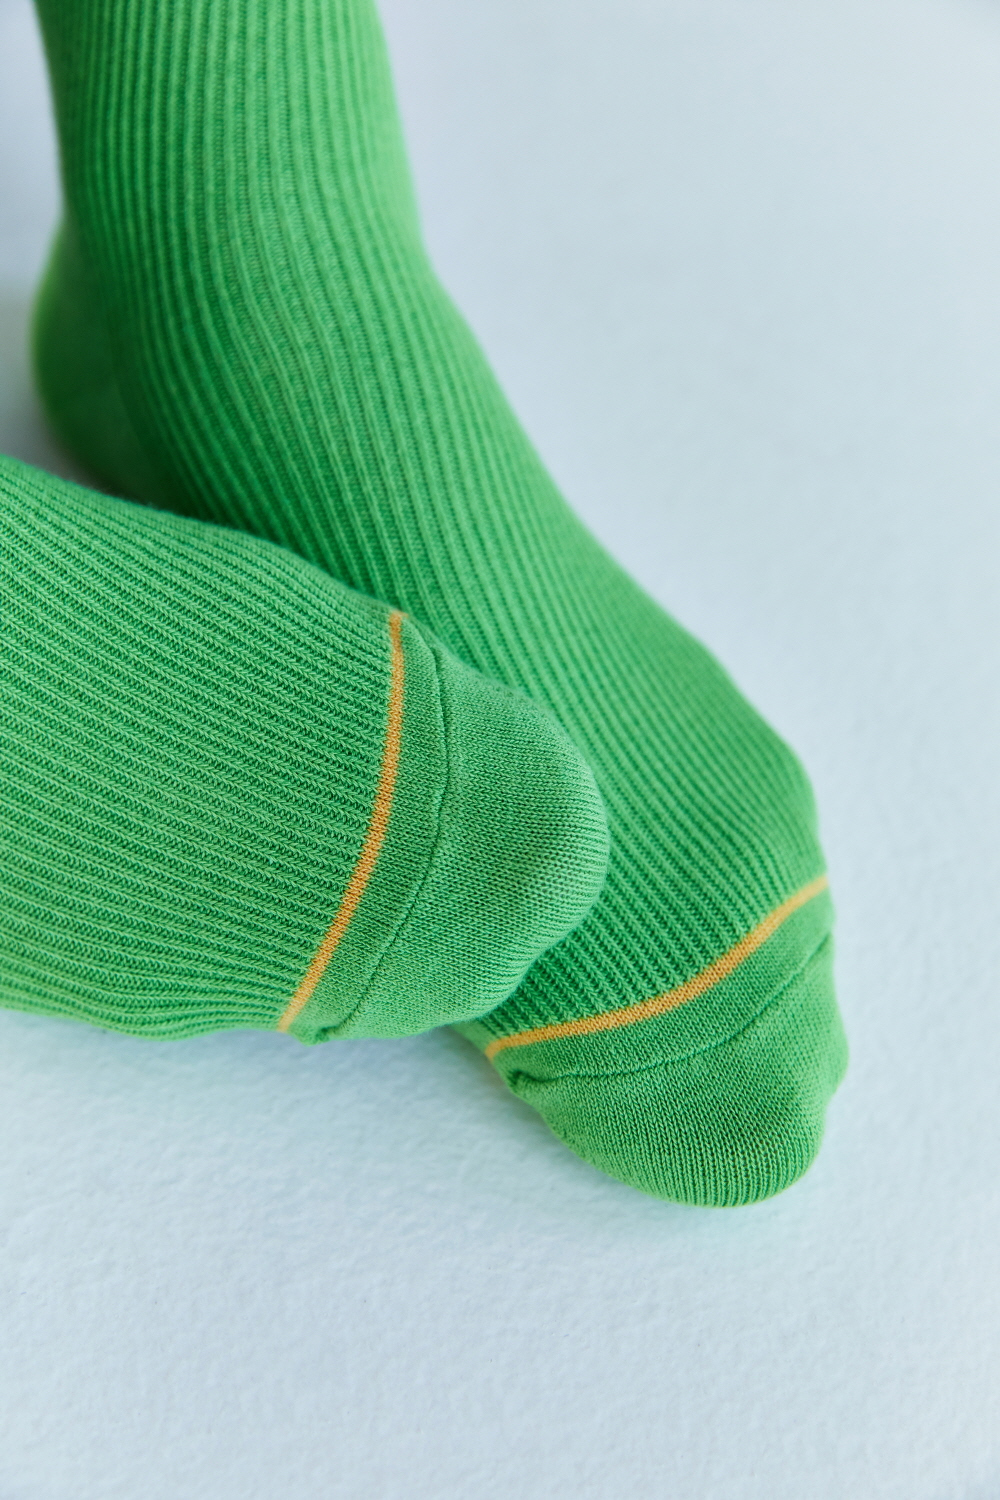 socks detail image-S1L50